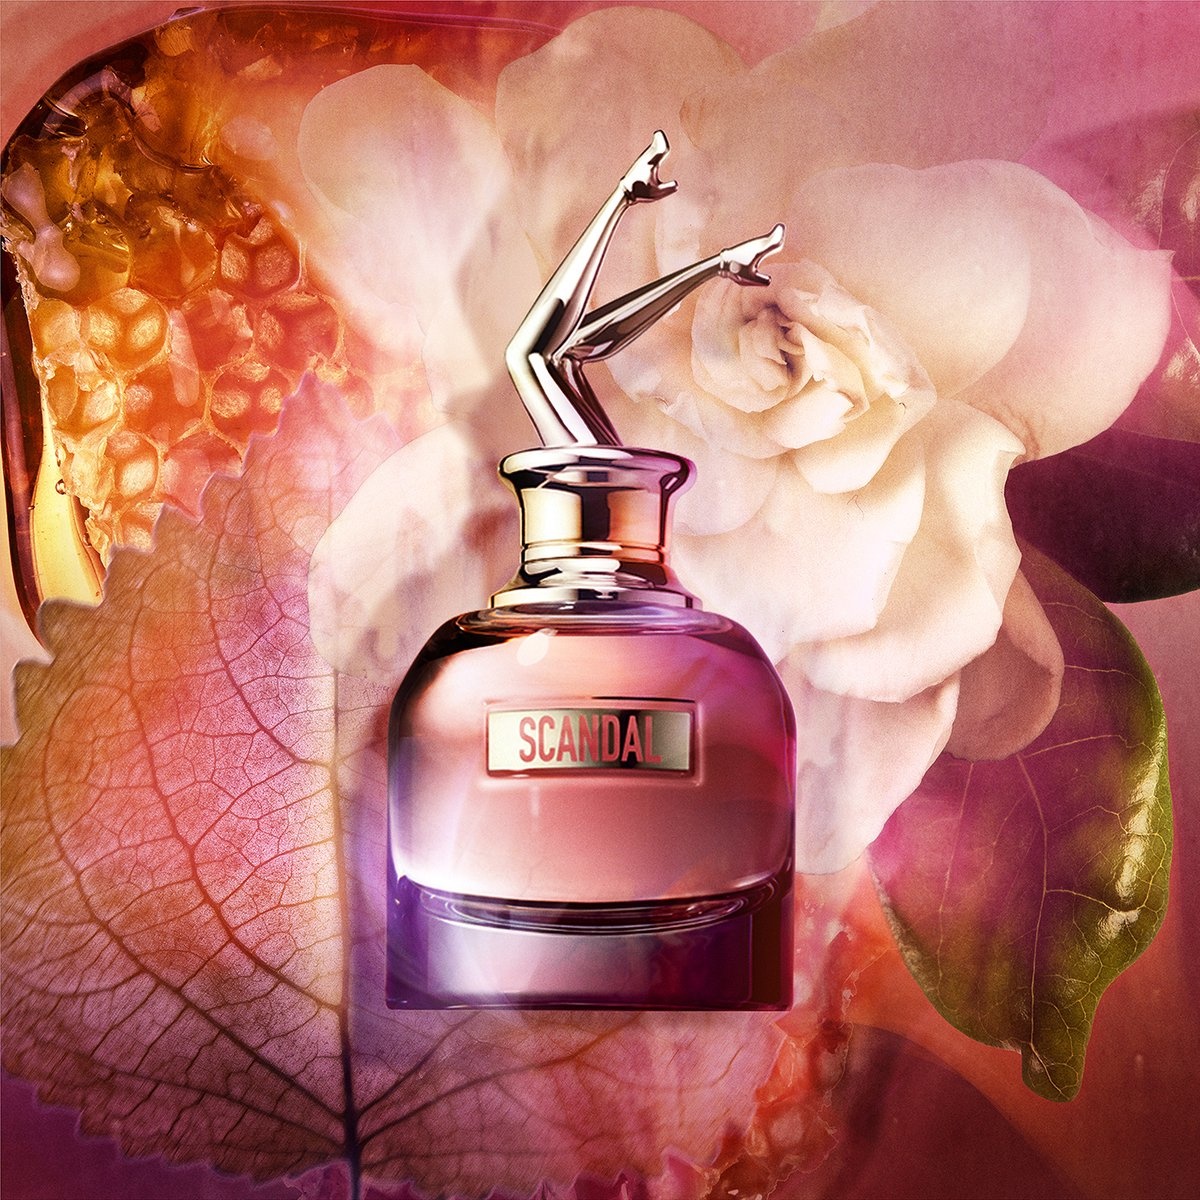 Jean Paul Gaultier Scandal 30 ml - Eau de Parfum - Women's Perfume